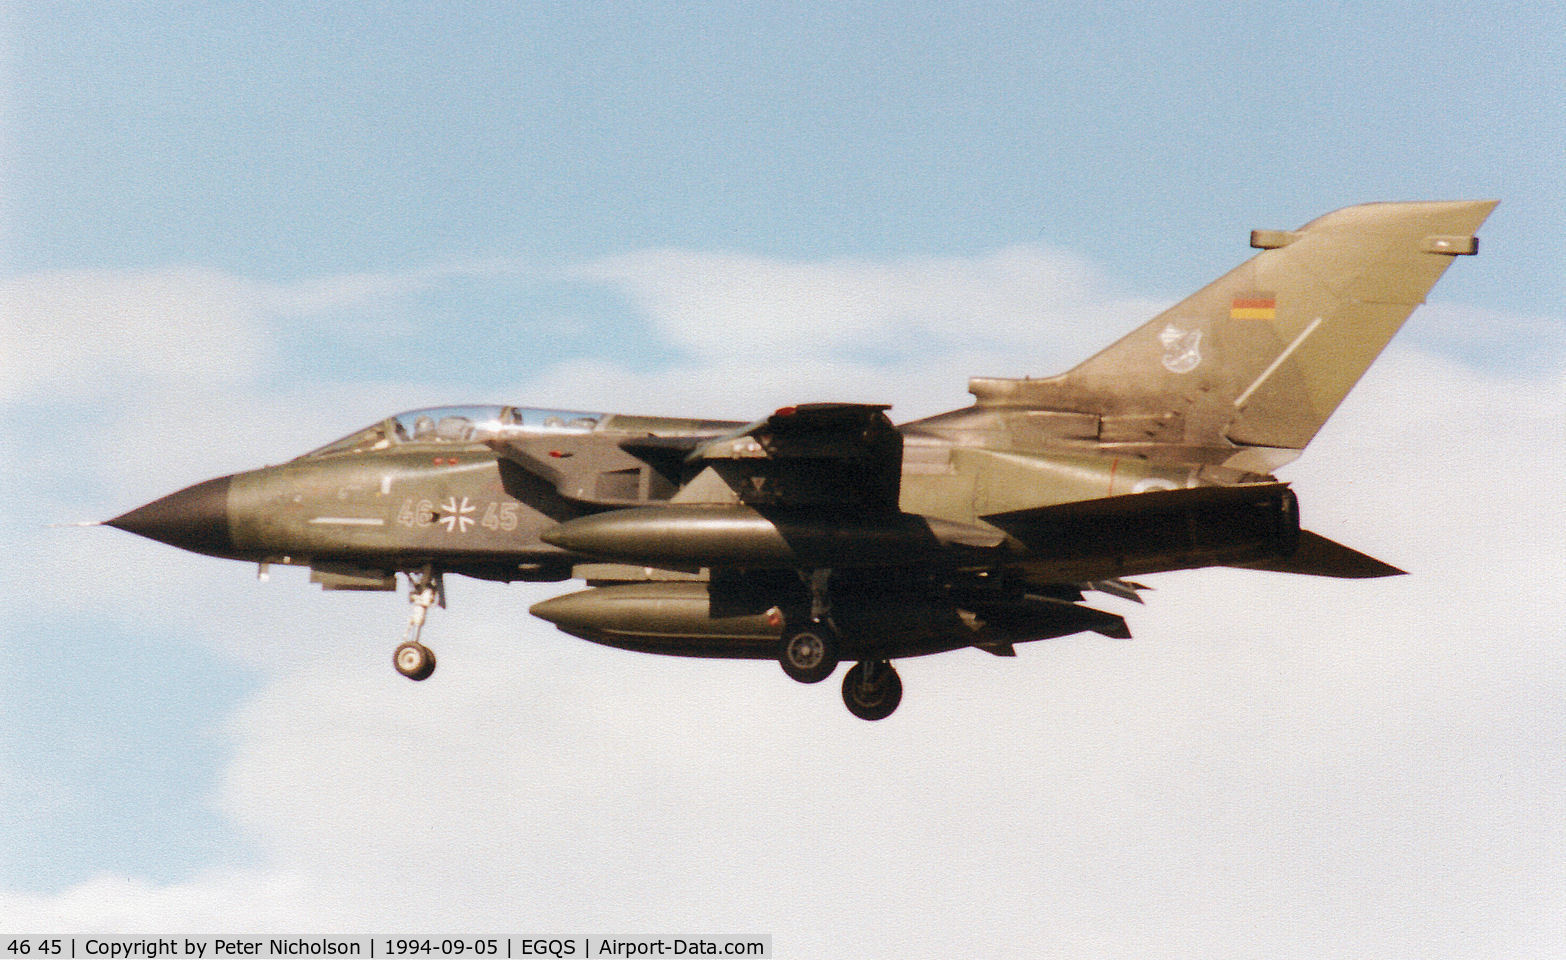 46 45, Panavia Tornado ECR C/N 873/GS278/4345, Tornado ECR, callsign Mission 3247 Alpha, of JBG-32 on final approach to Runway 23 at RAF Lossiemouth in September 1994.